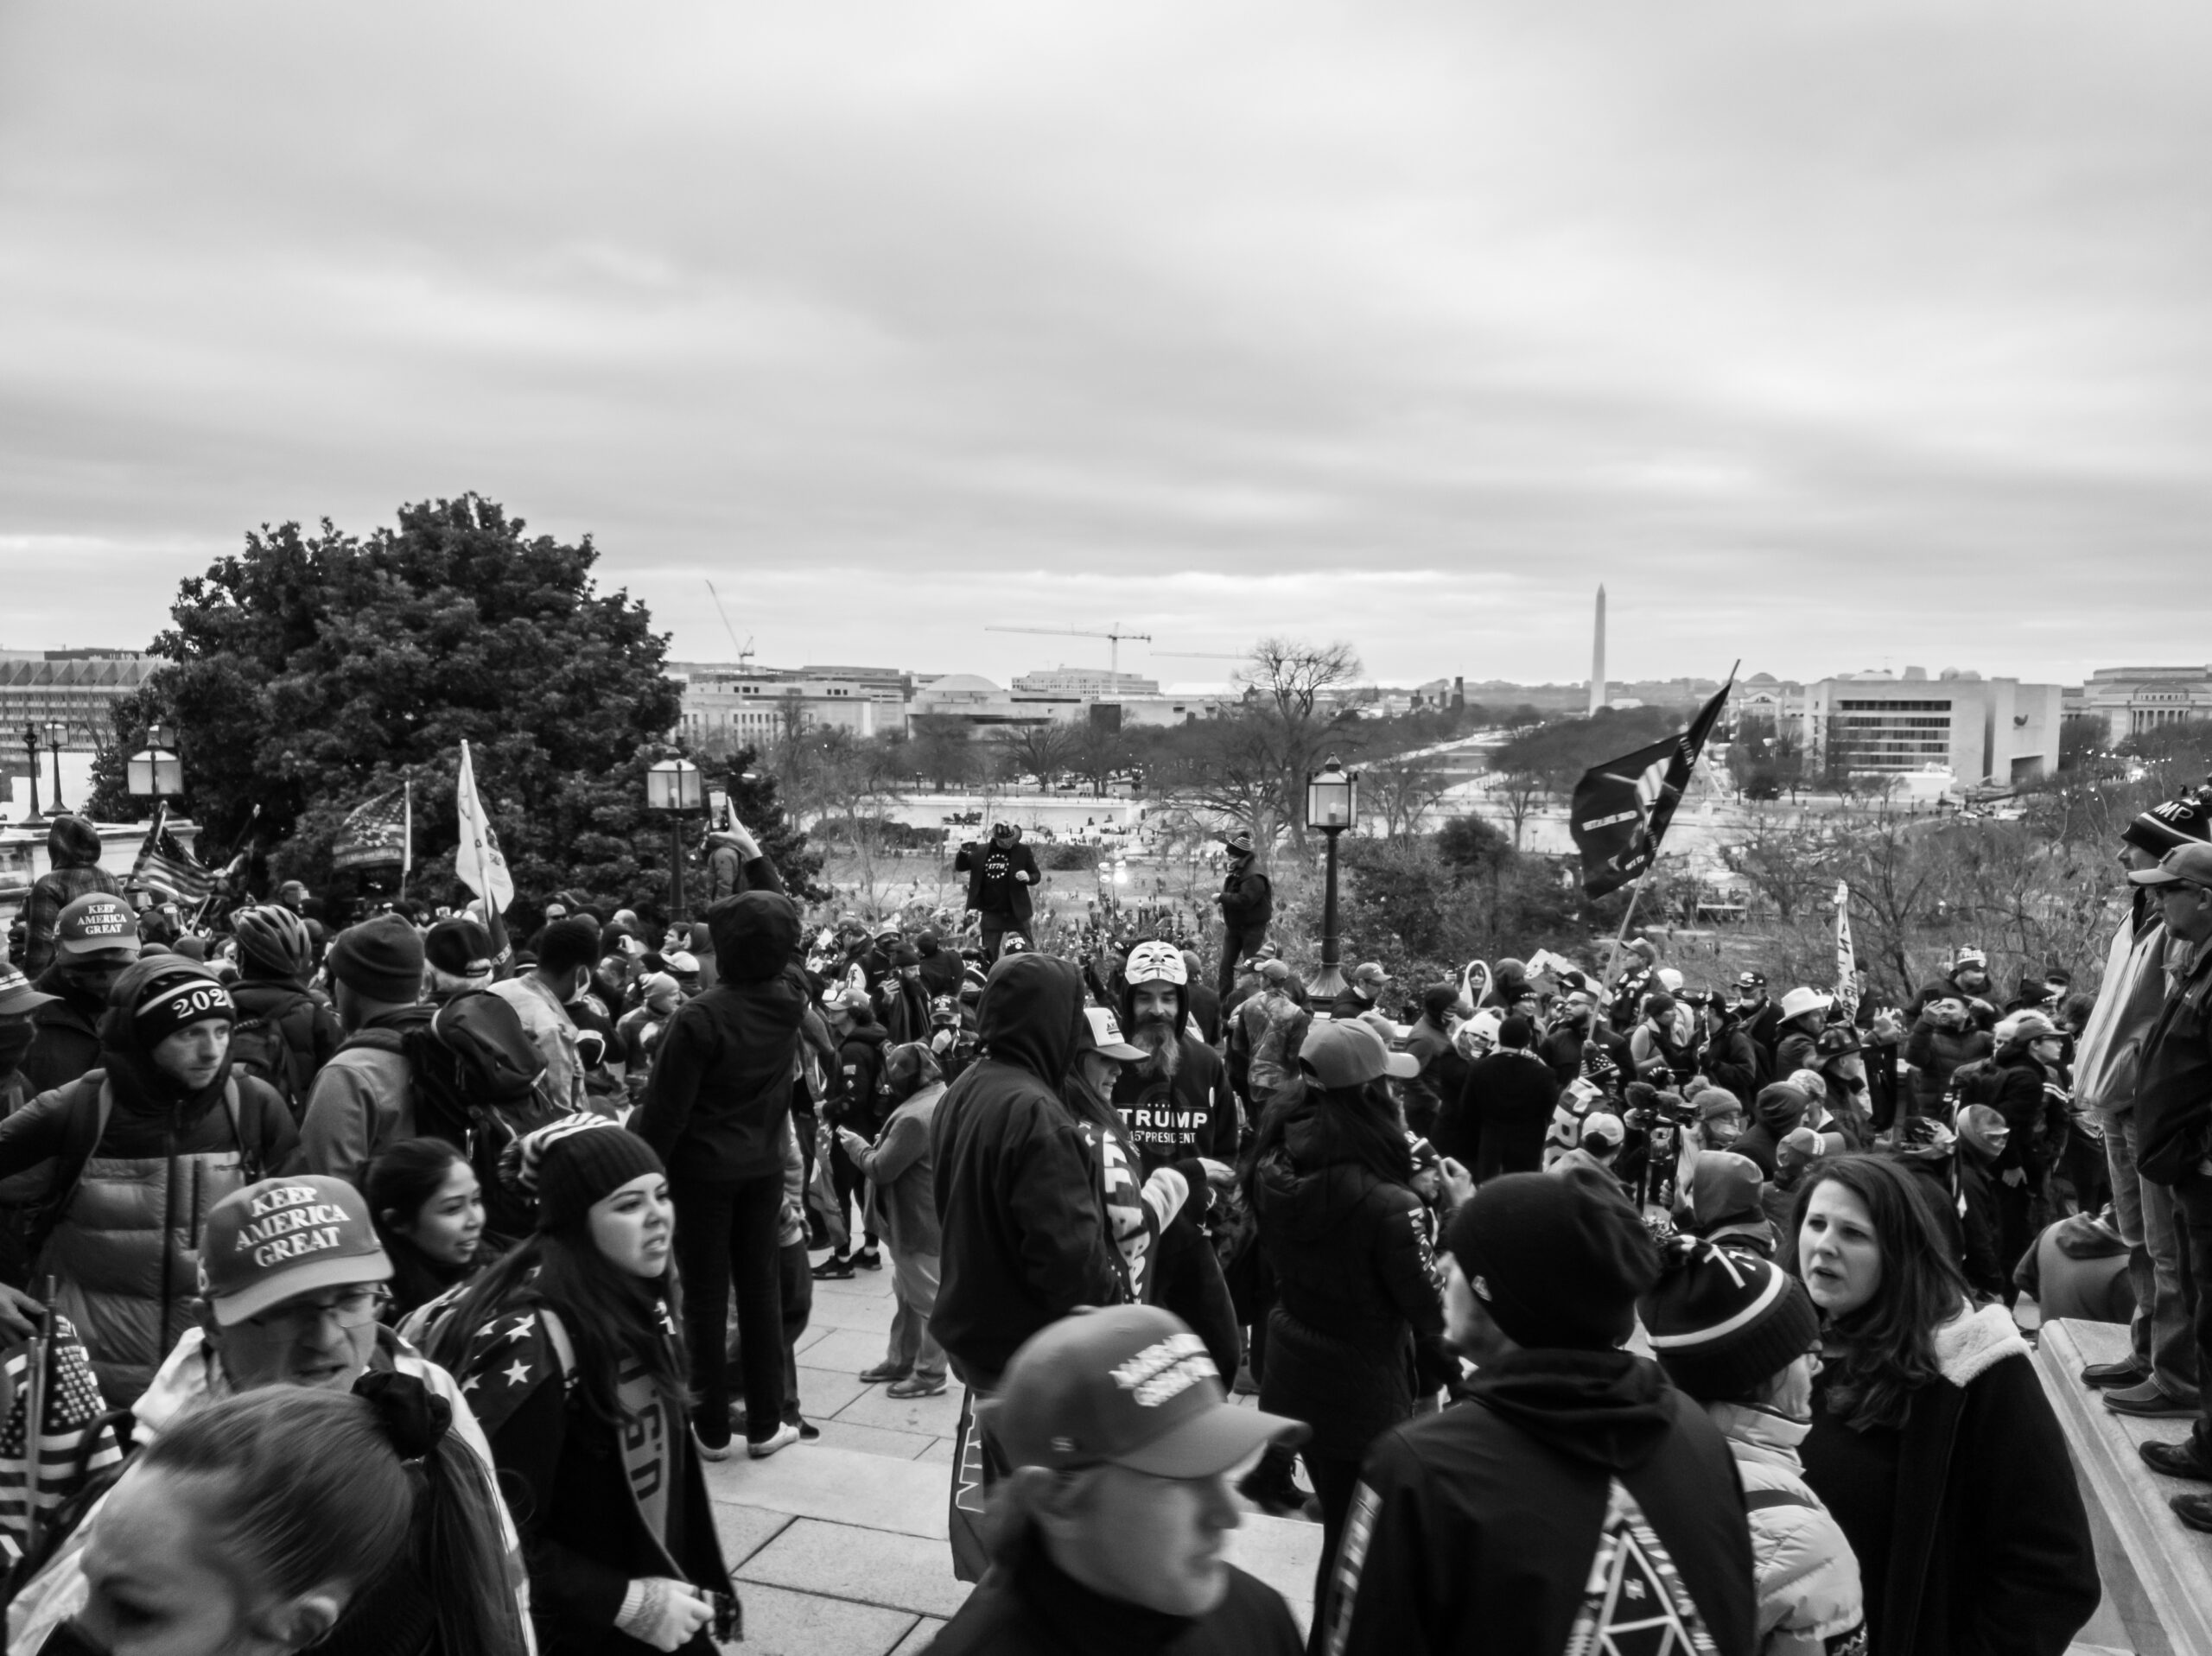 Black and white photo of protestors